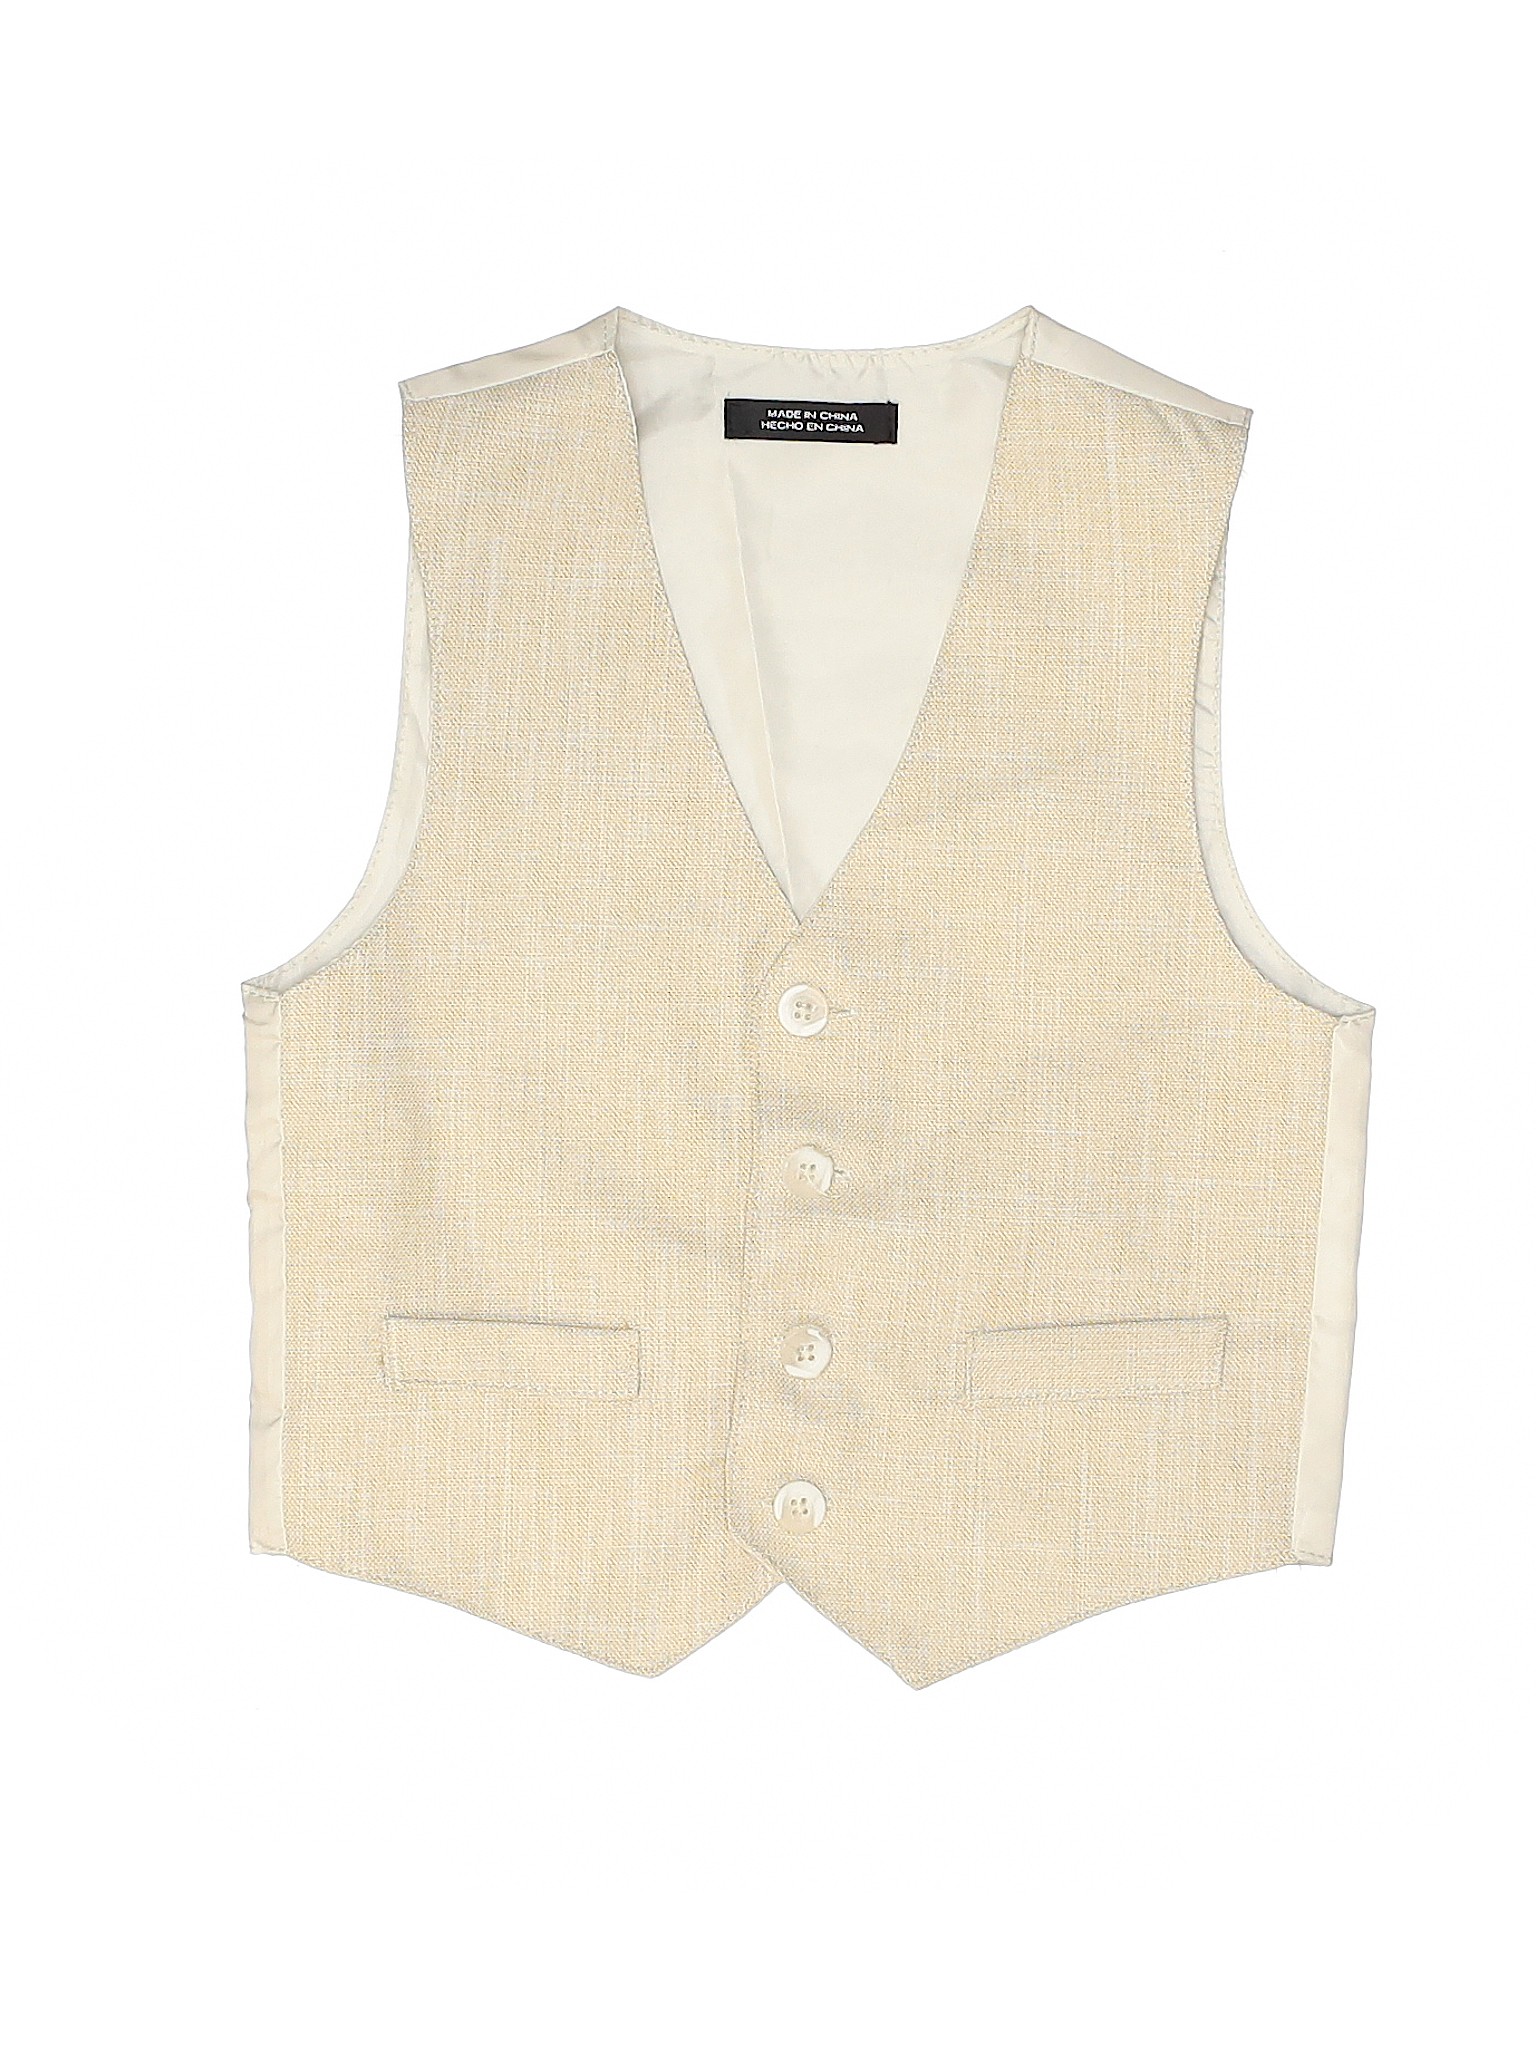 Unbranded Boys Ivory Tuxedo Vest 4T | eBay